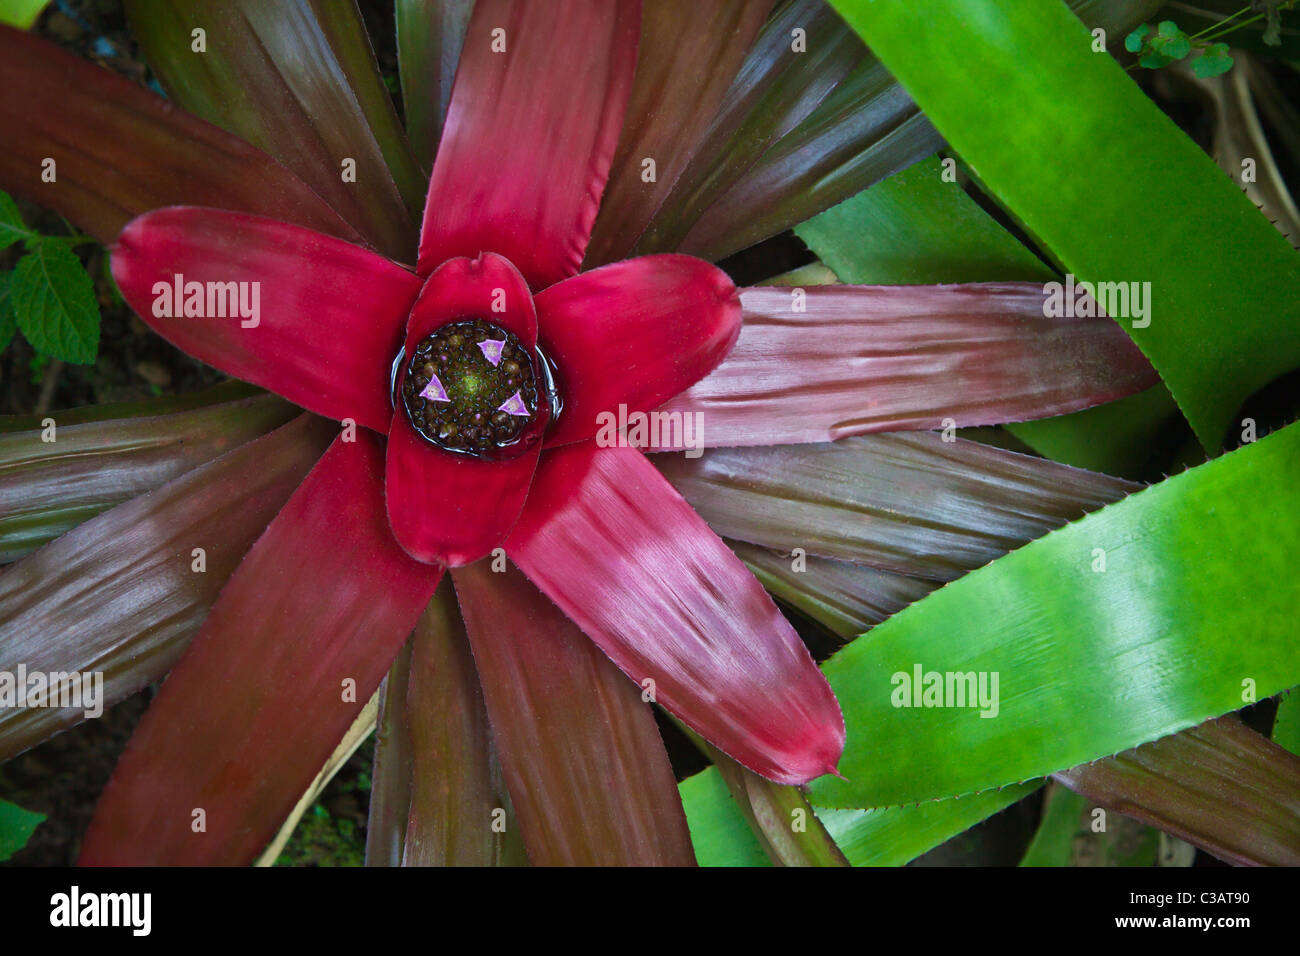 Multicolored BROMELIAD PLANTS at the BOTANICAL GARDEN UBUD - BALI, INDONESIA Stock Photo